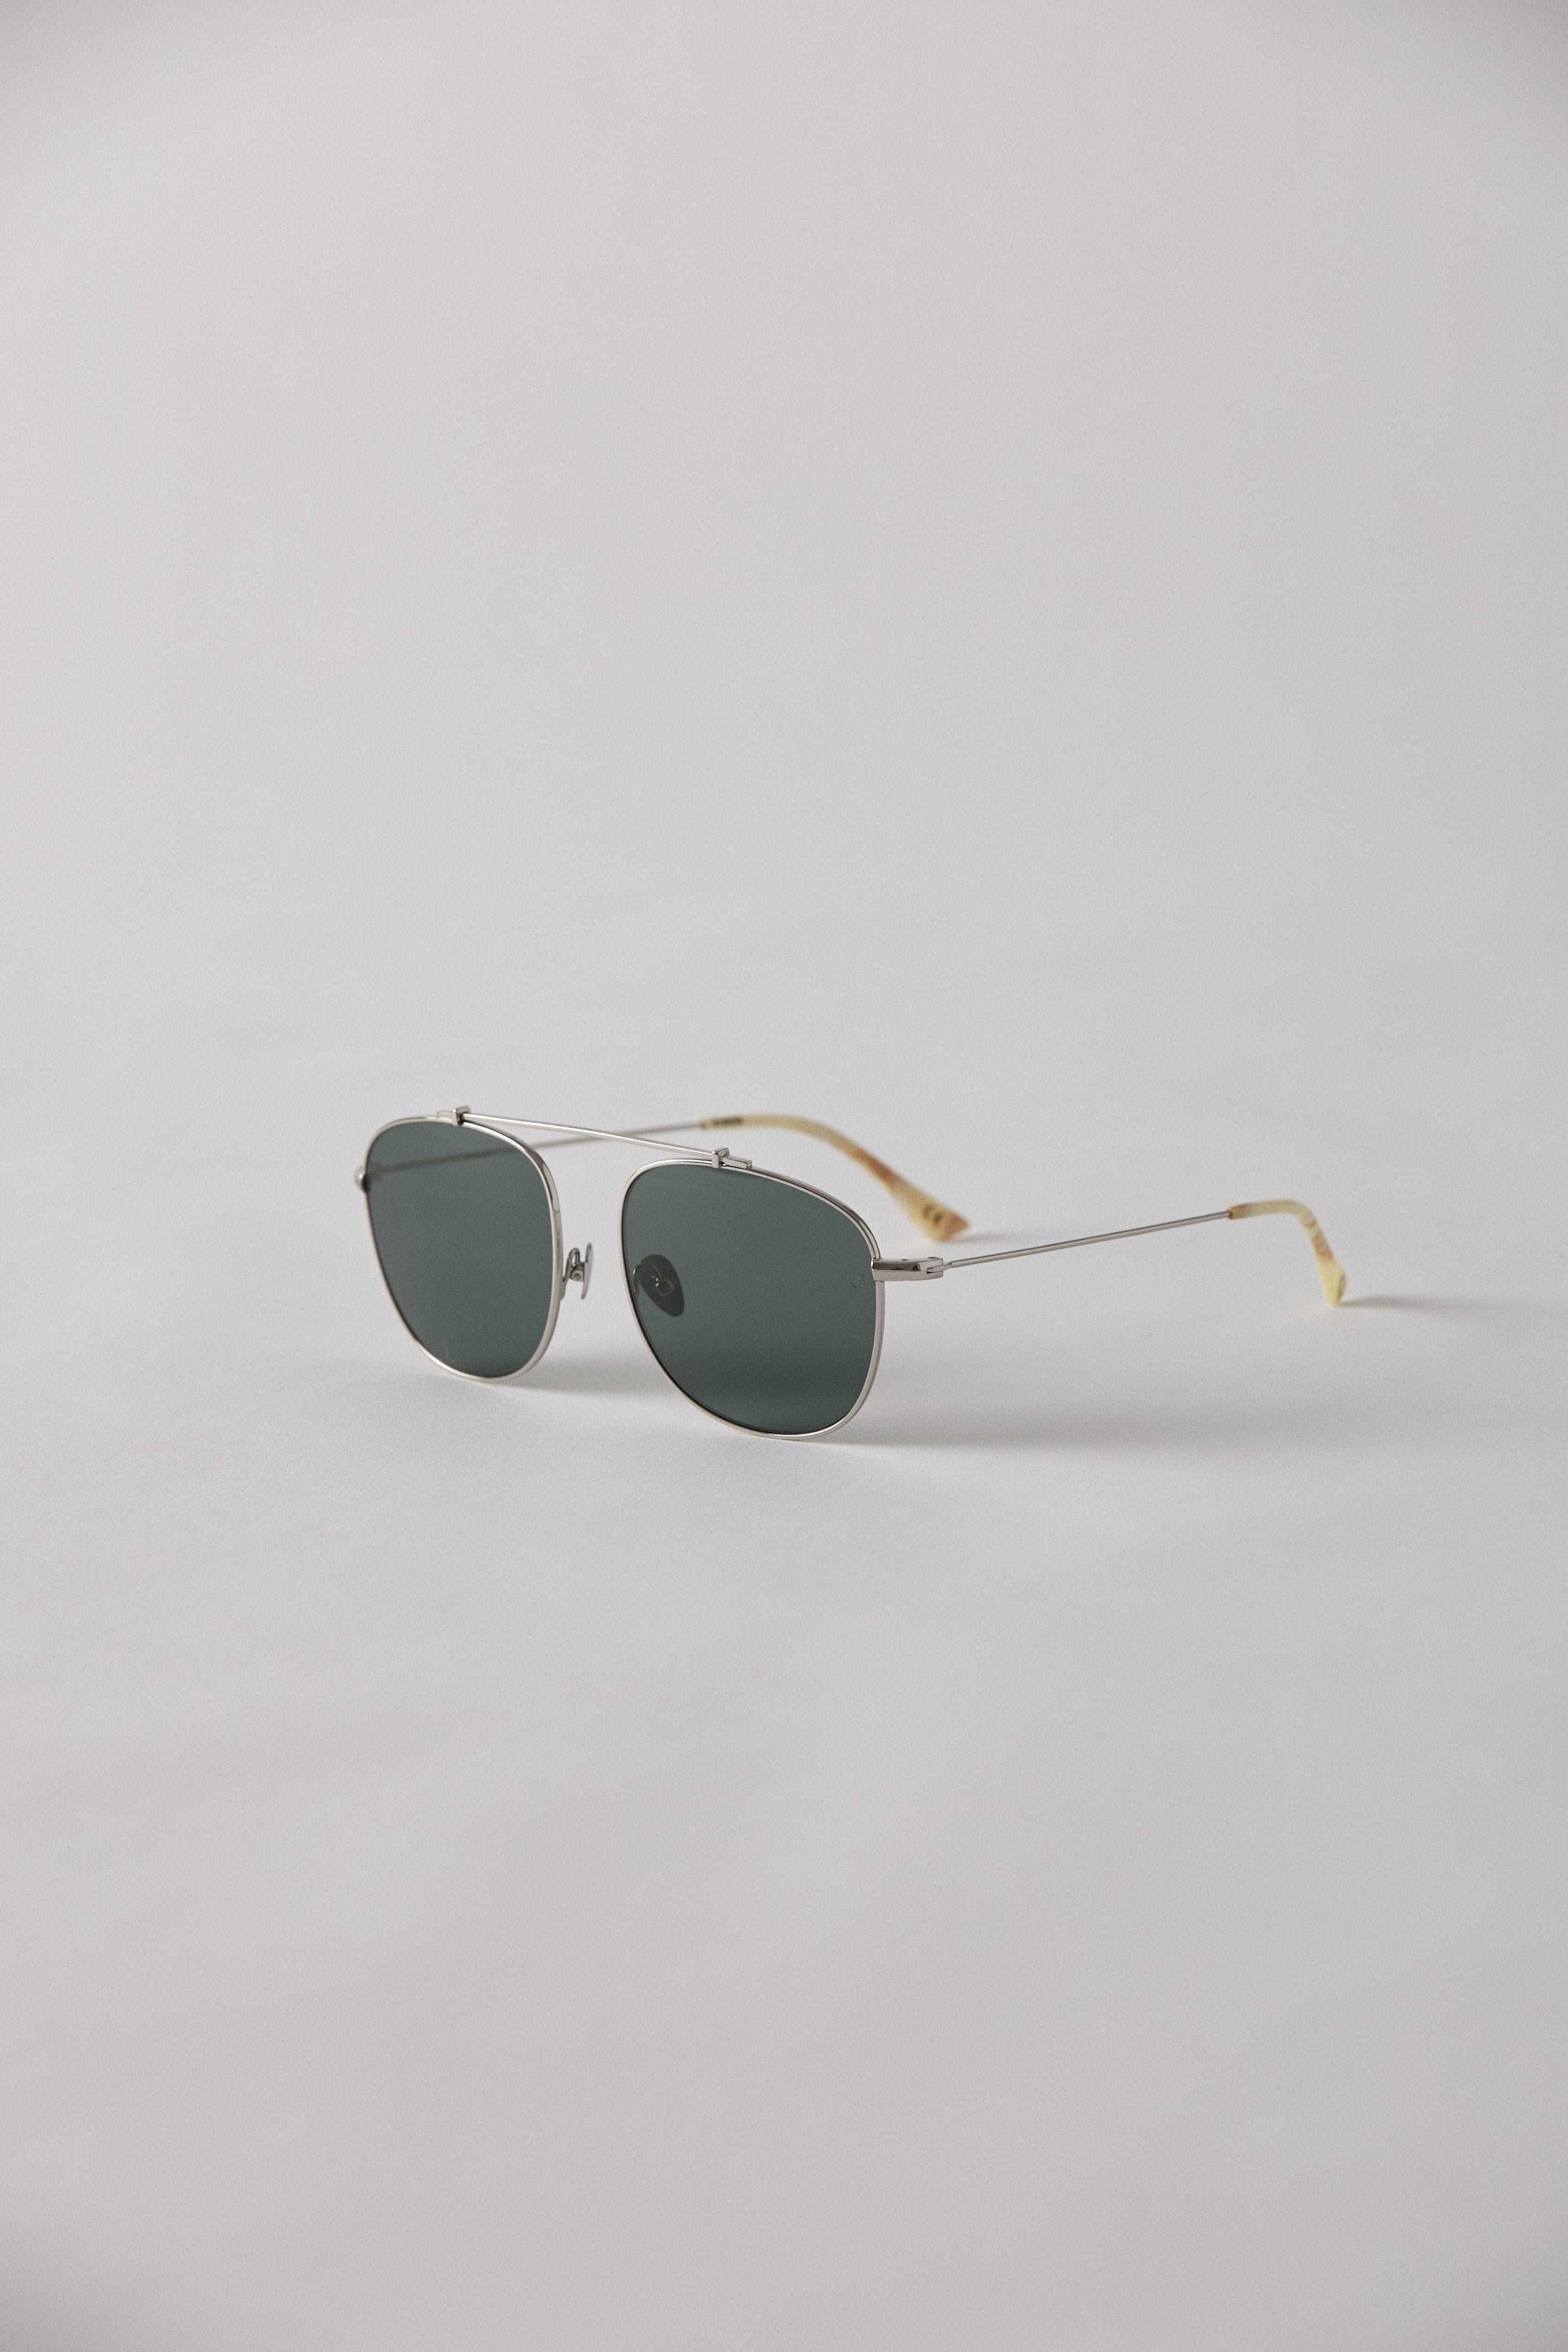 Notomy - Silver Polished / Green - Sunglasses - EPOKHE EYEWEAR